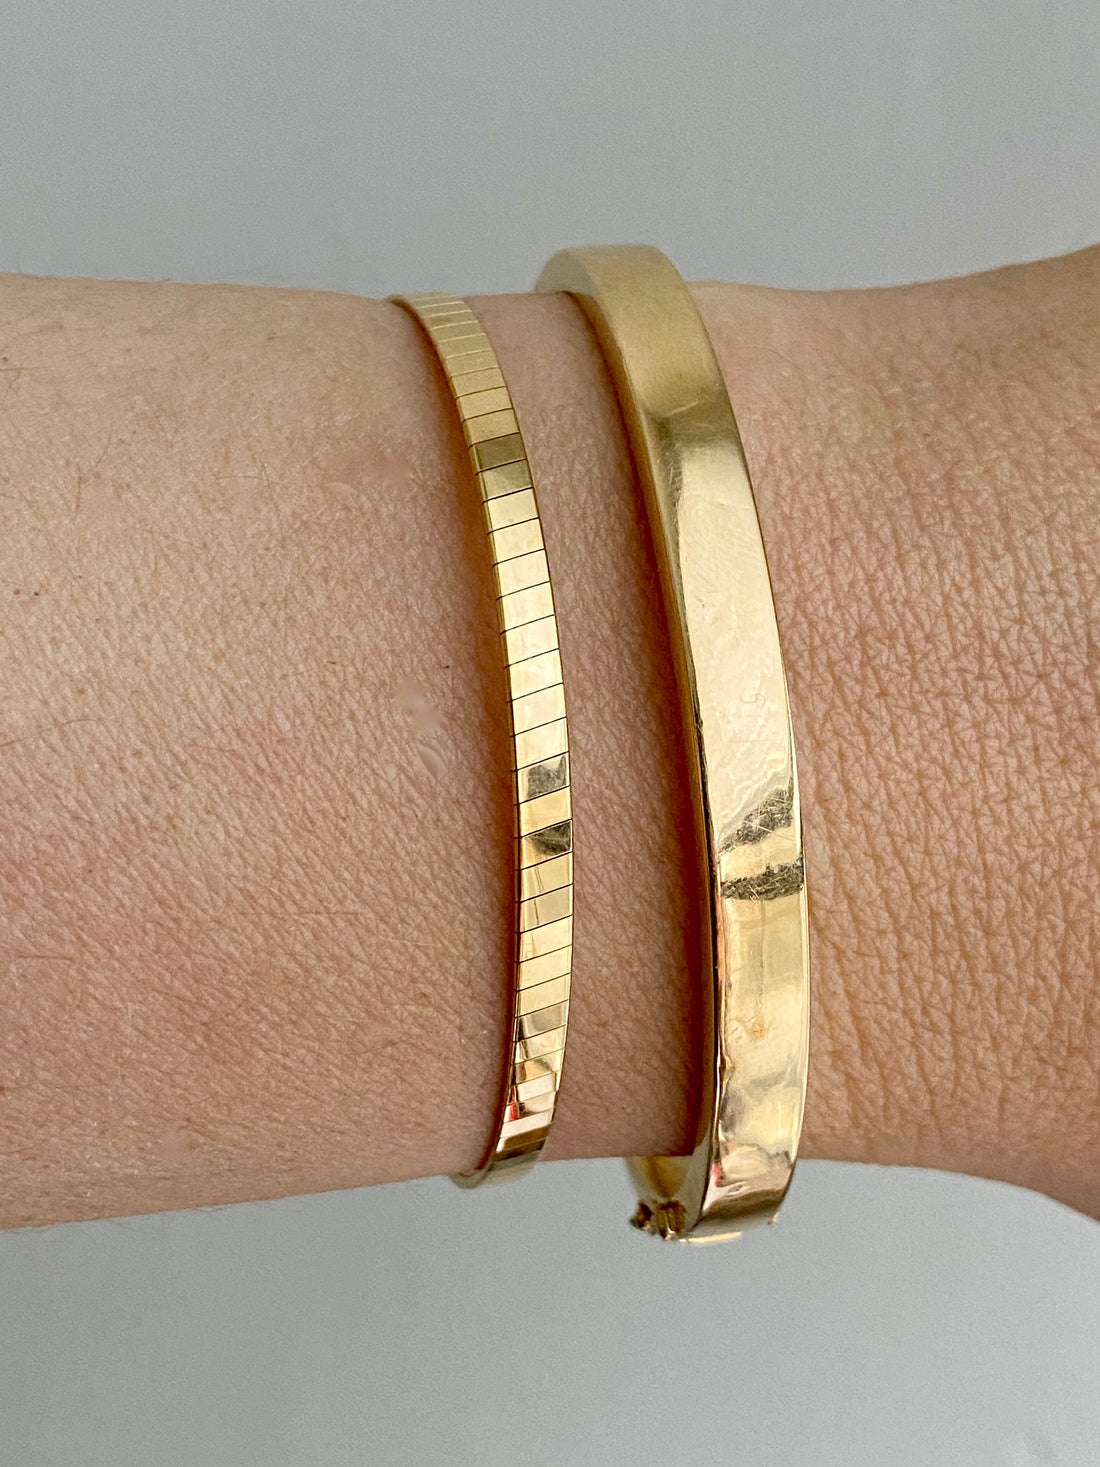 18k gold high polish semi-rigid bracelet - 7.125 inch length (18cm)